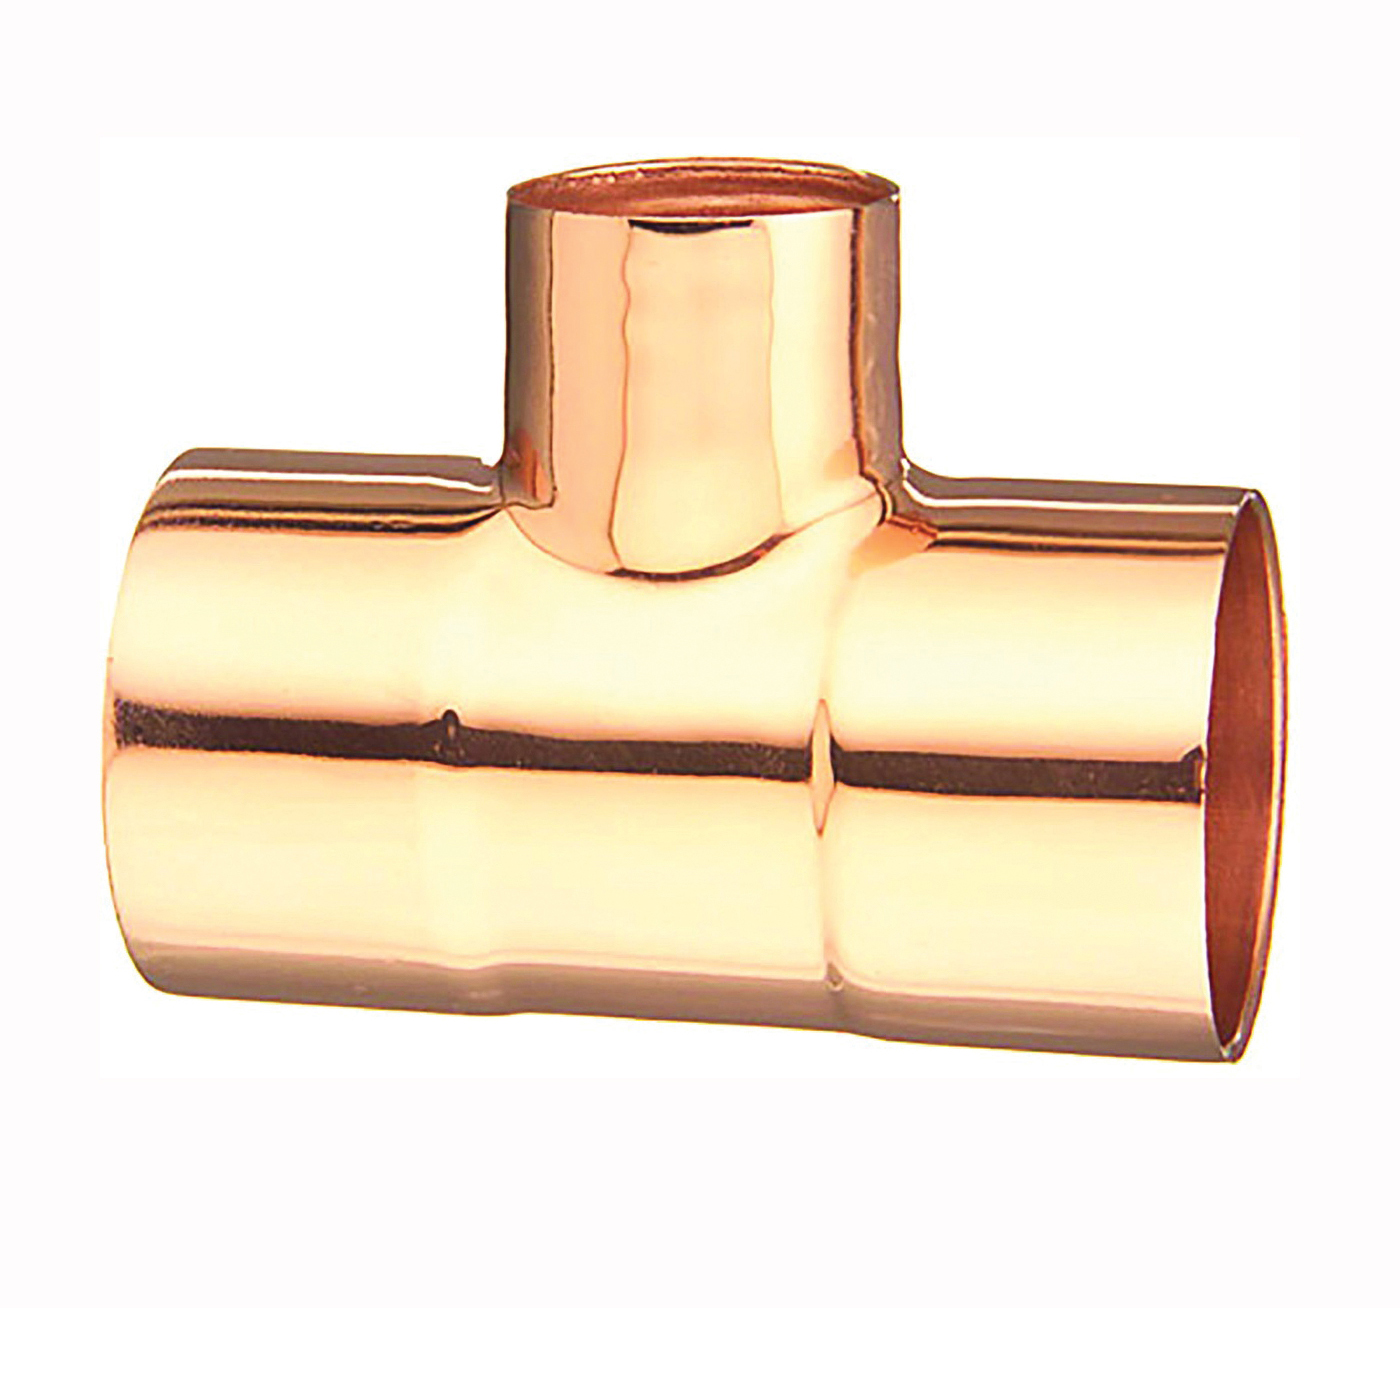 111R Series 32918 Reducing Pipe Tee, 1-1/2 x 1-1/2 x 3/4 in, Sweat, Copper